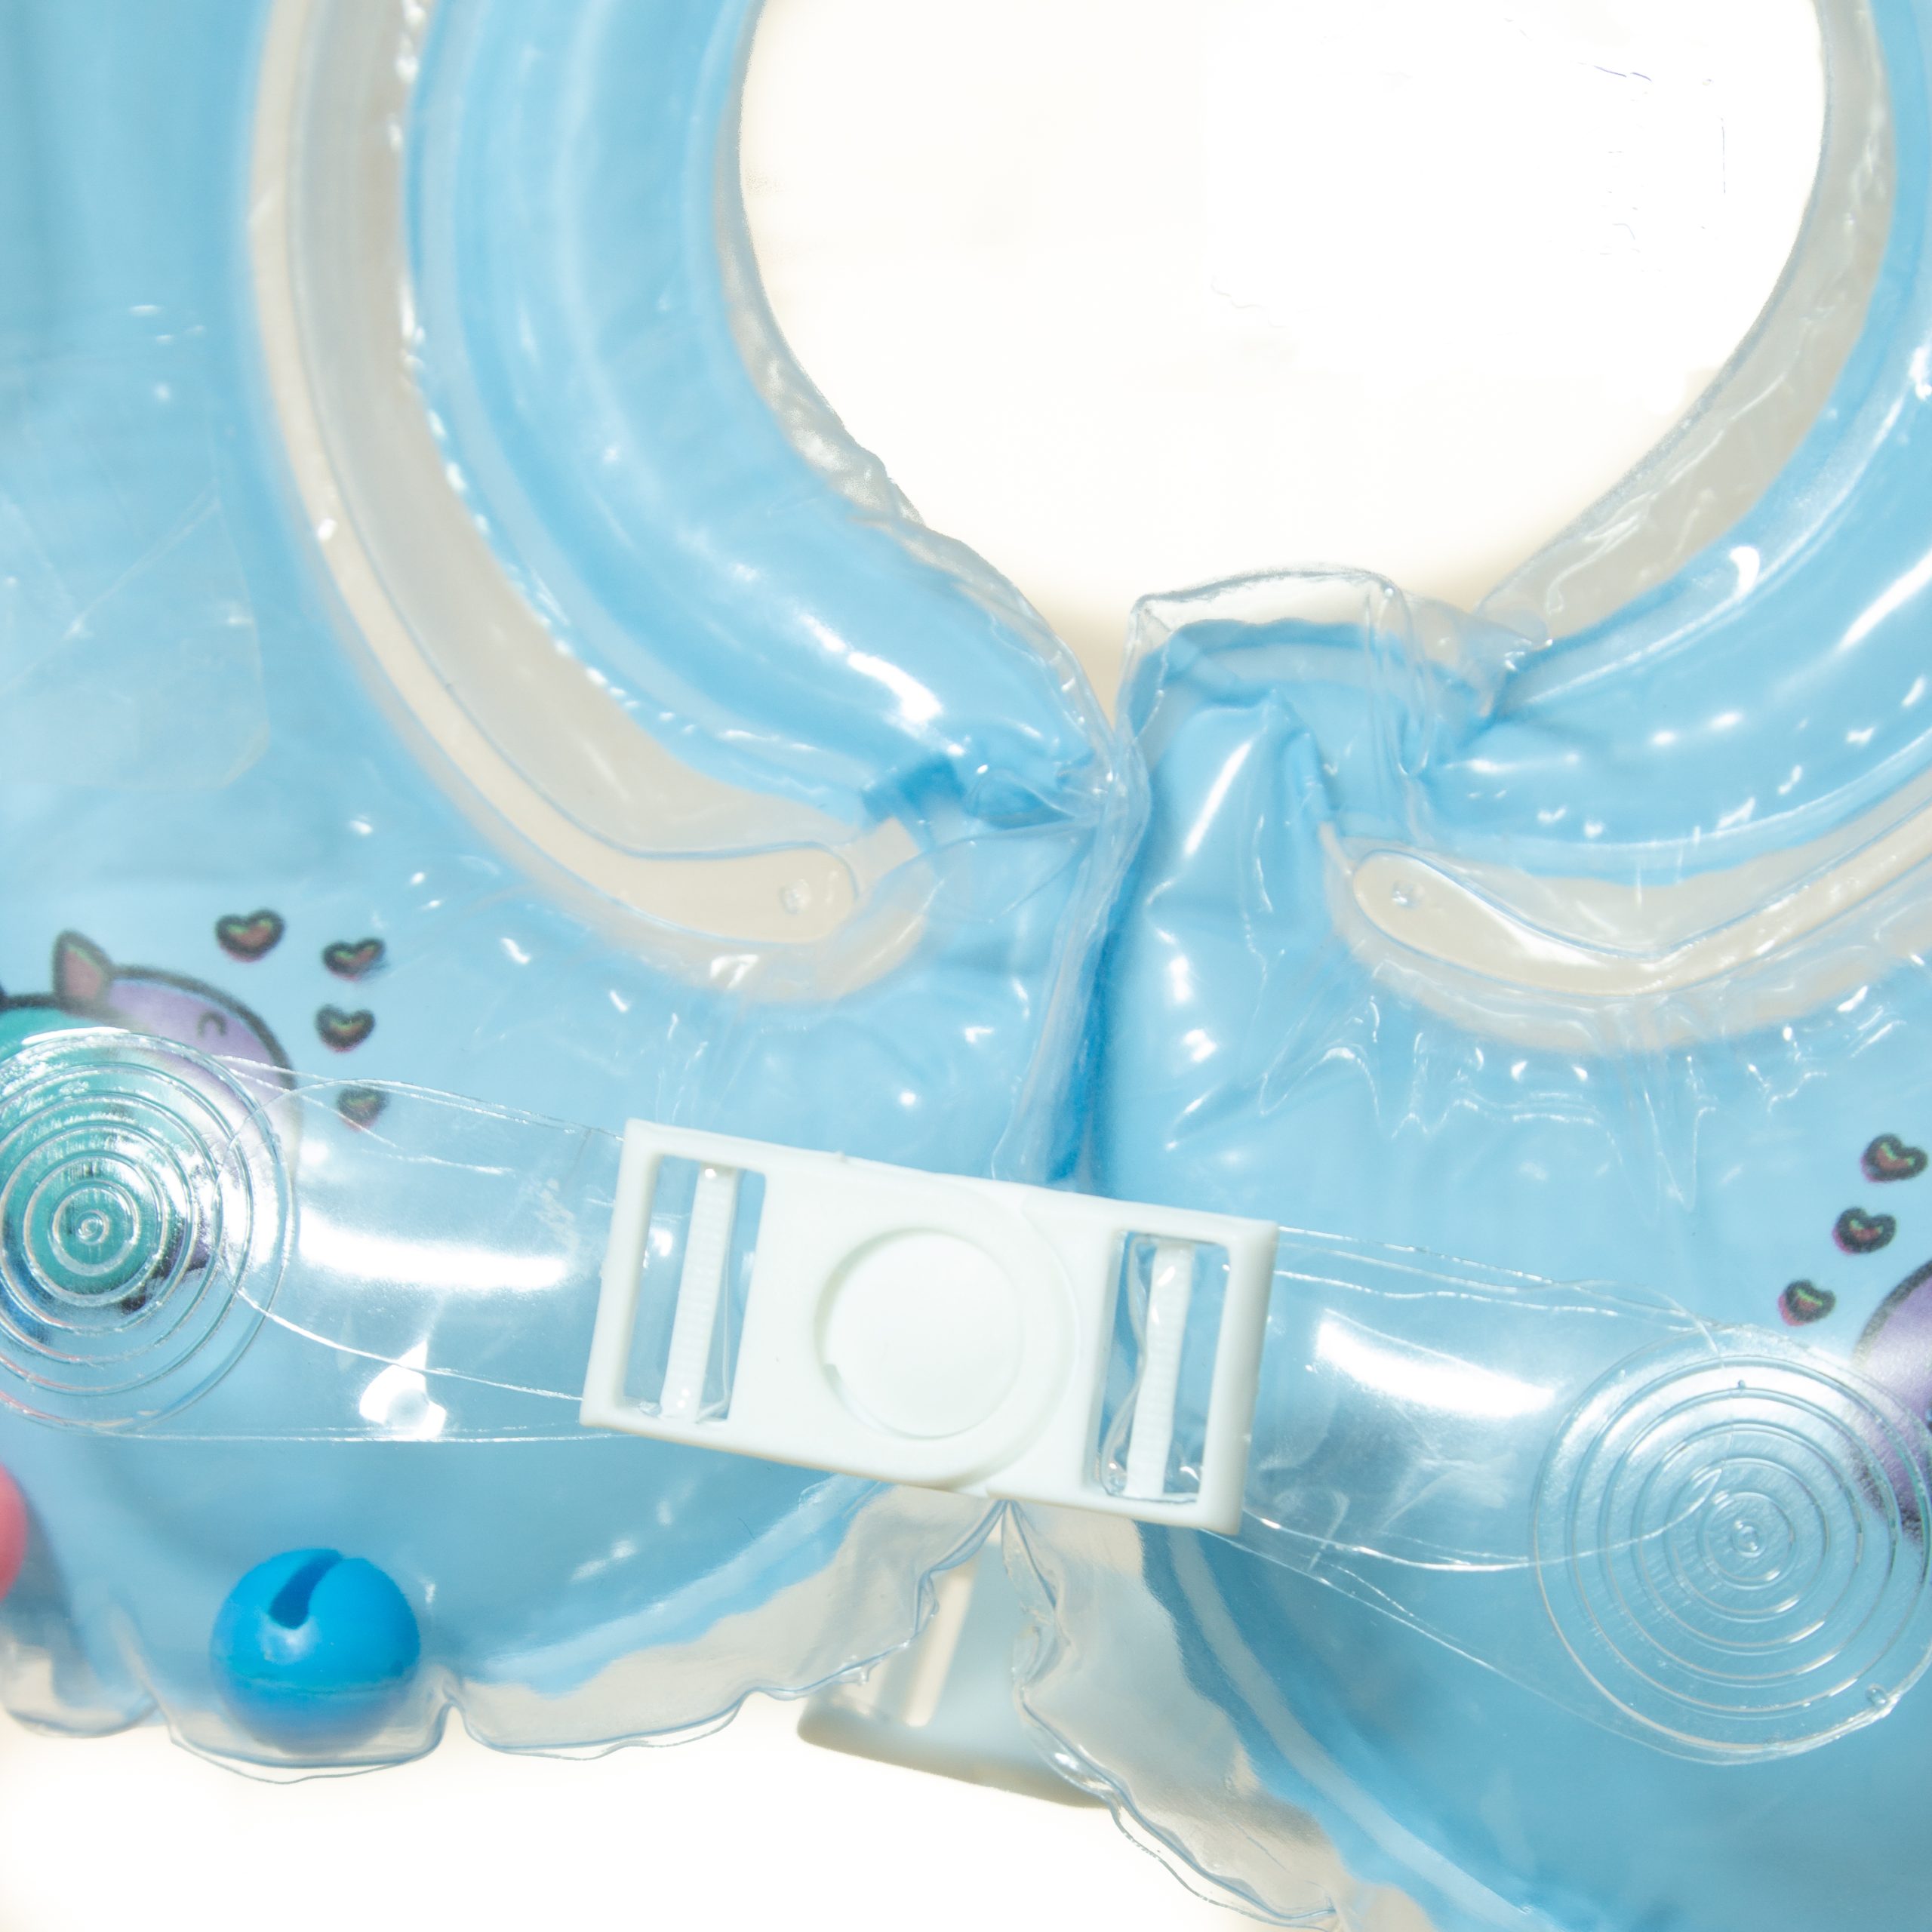 Pikkaboo - ISwimSafe Infant Neck Floater - Blue